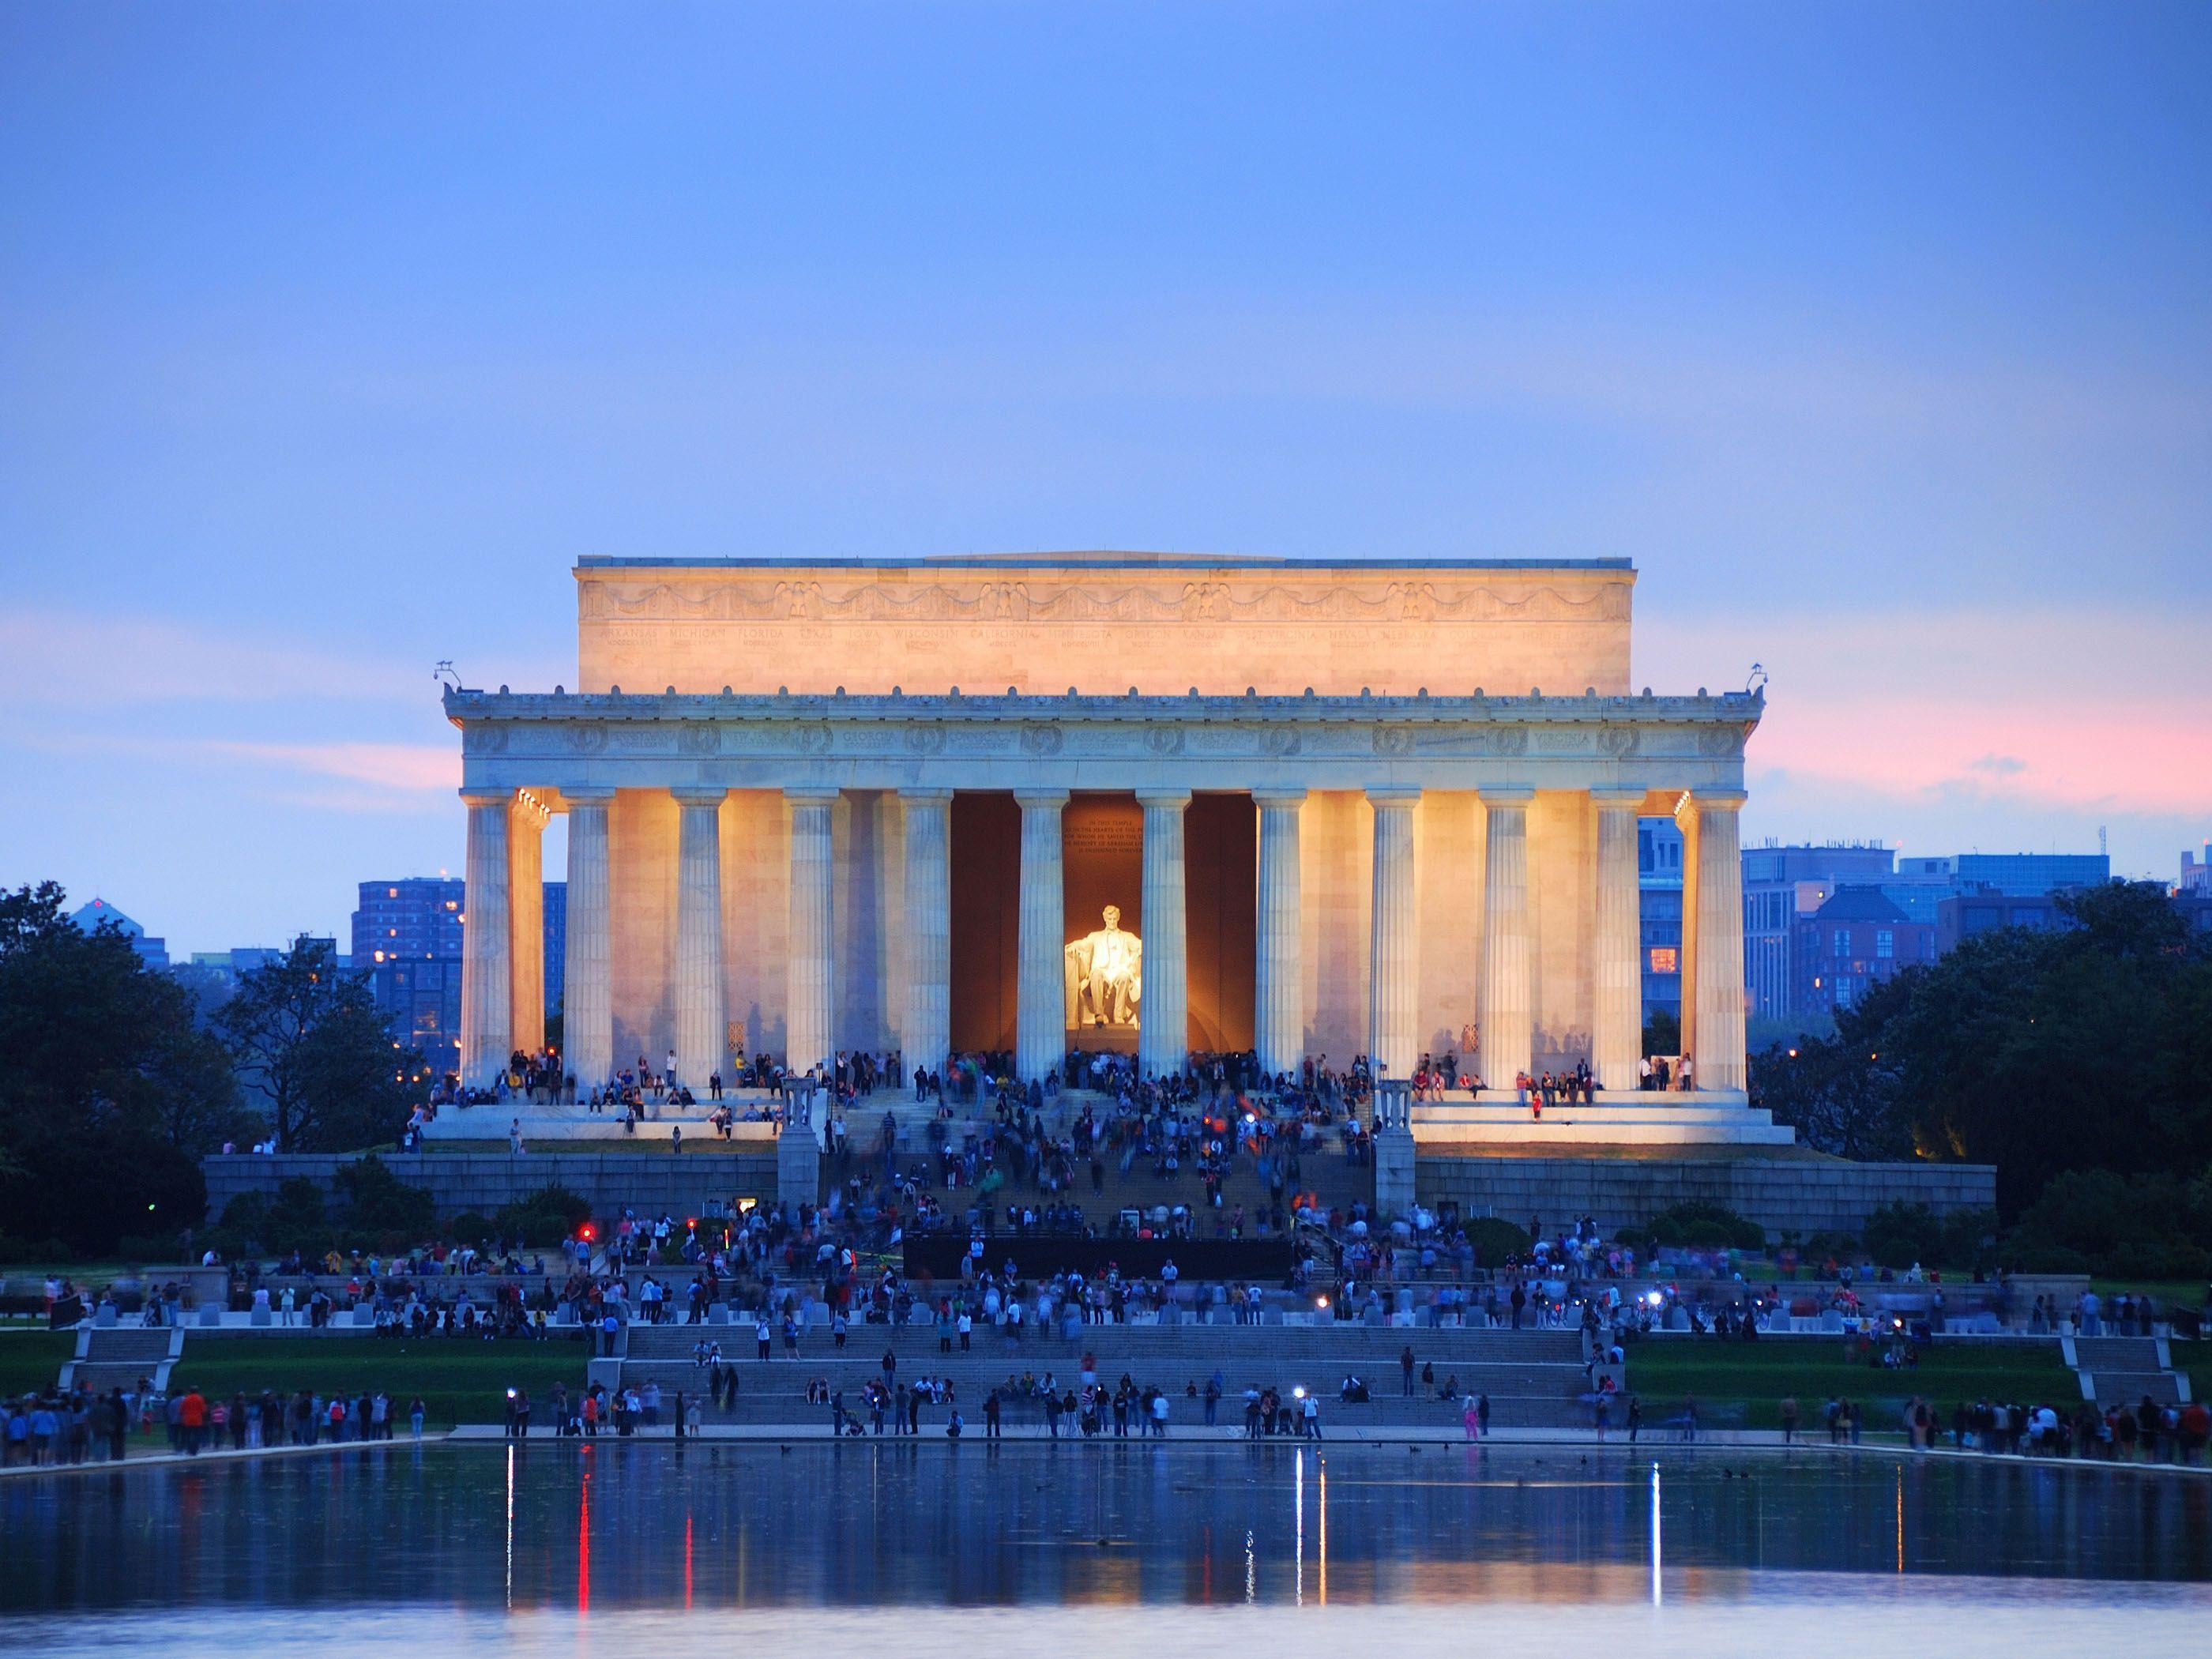 Lincoln Memorial, Washington, D.C. HQ Wallpaper for PC